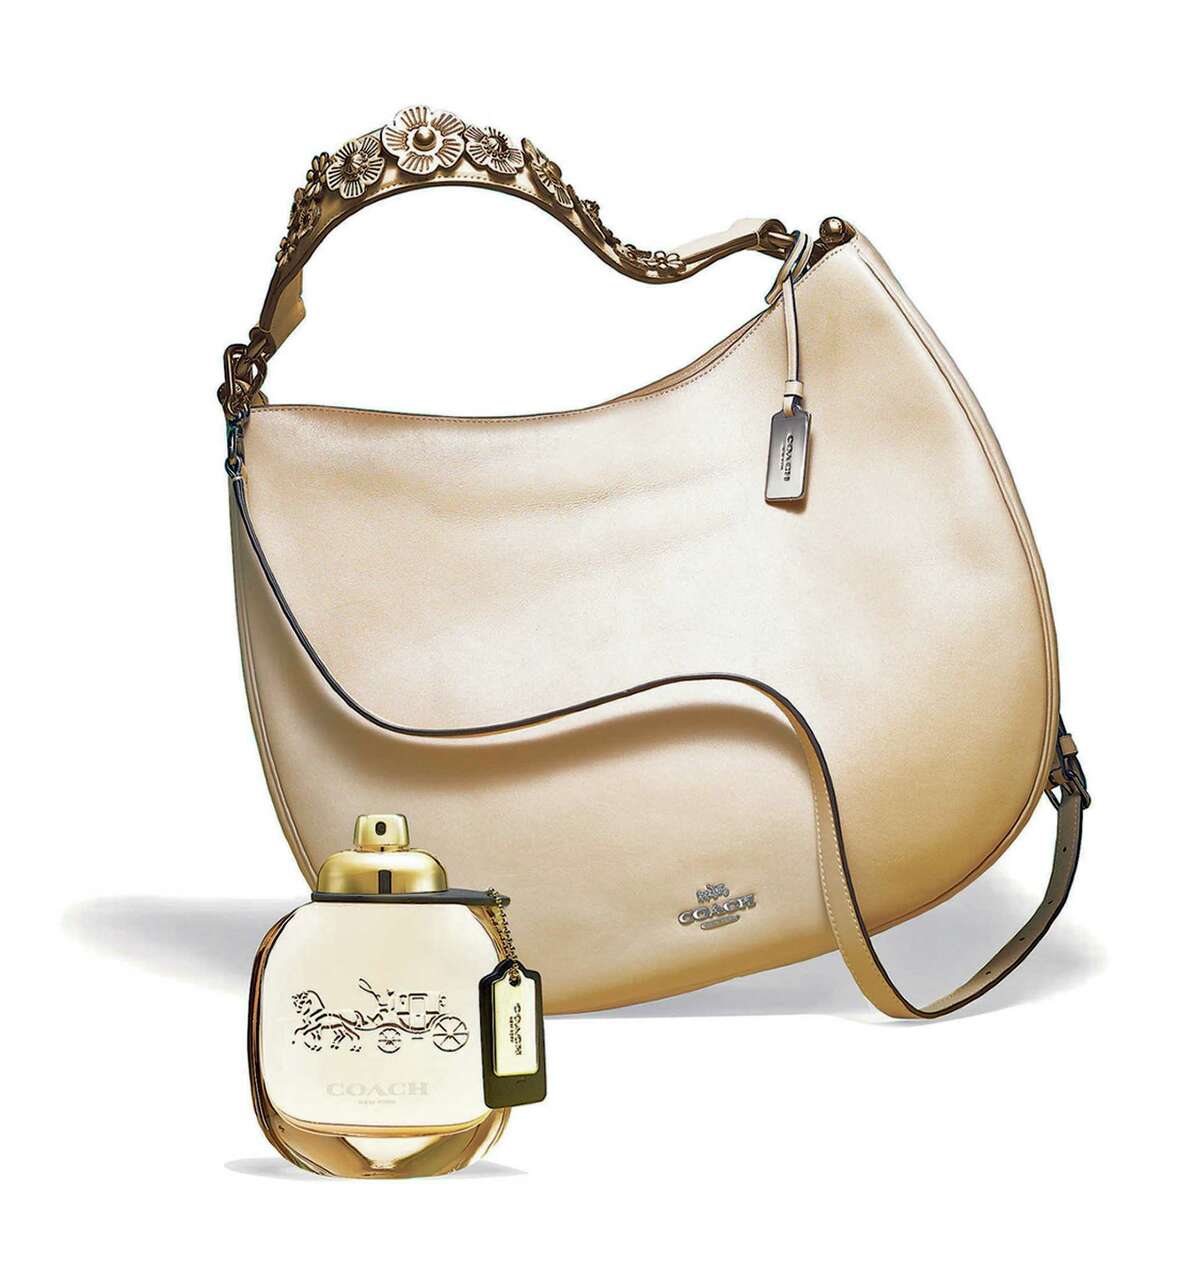 Coach Hobo Bag, (parfum separate), $574